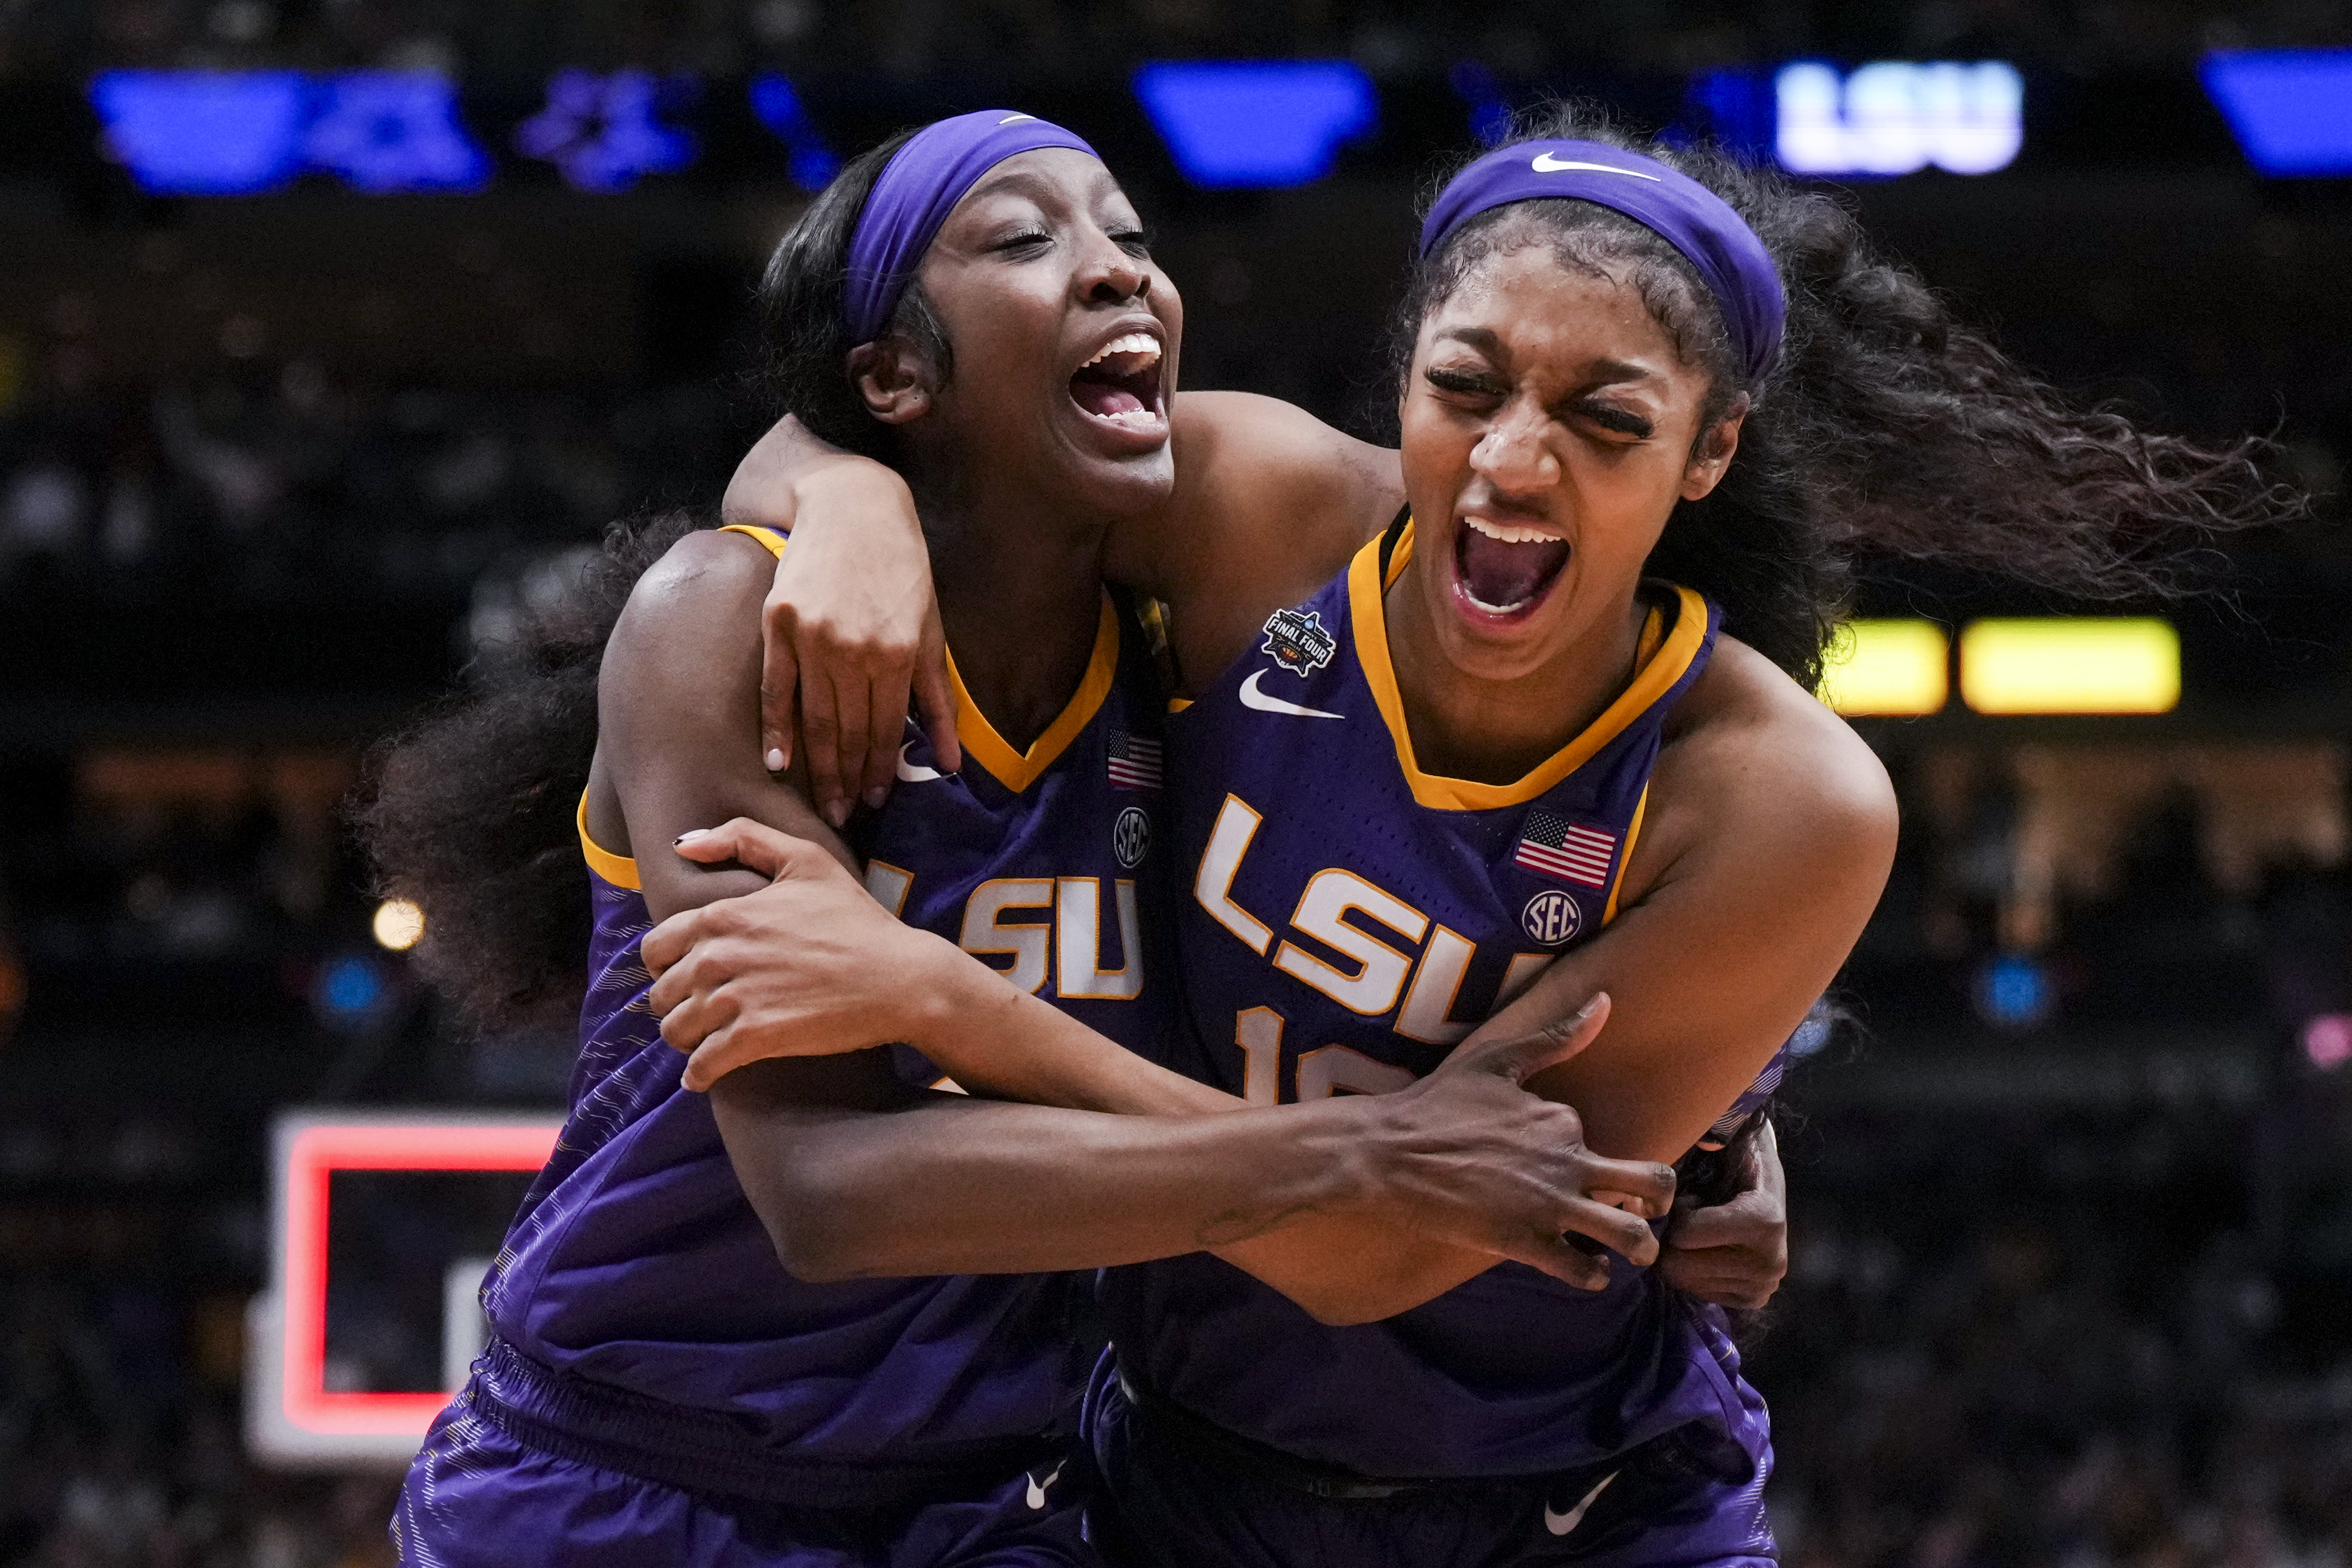 NCAA Womens Basketball: Final Four National Semifinals-Louisiana State vs Virginia Tech